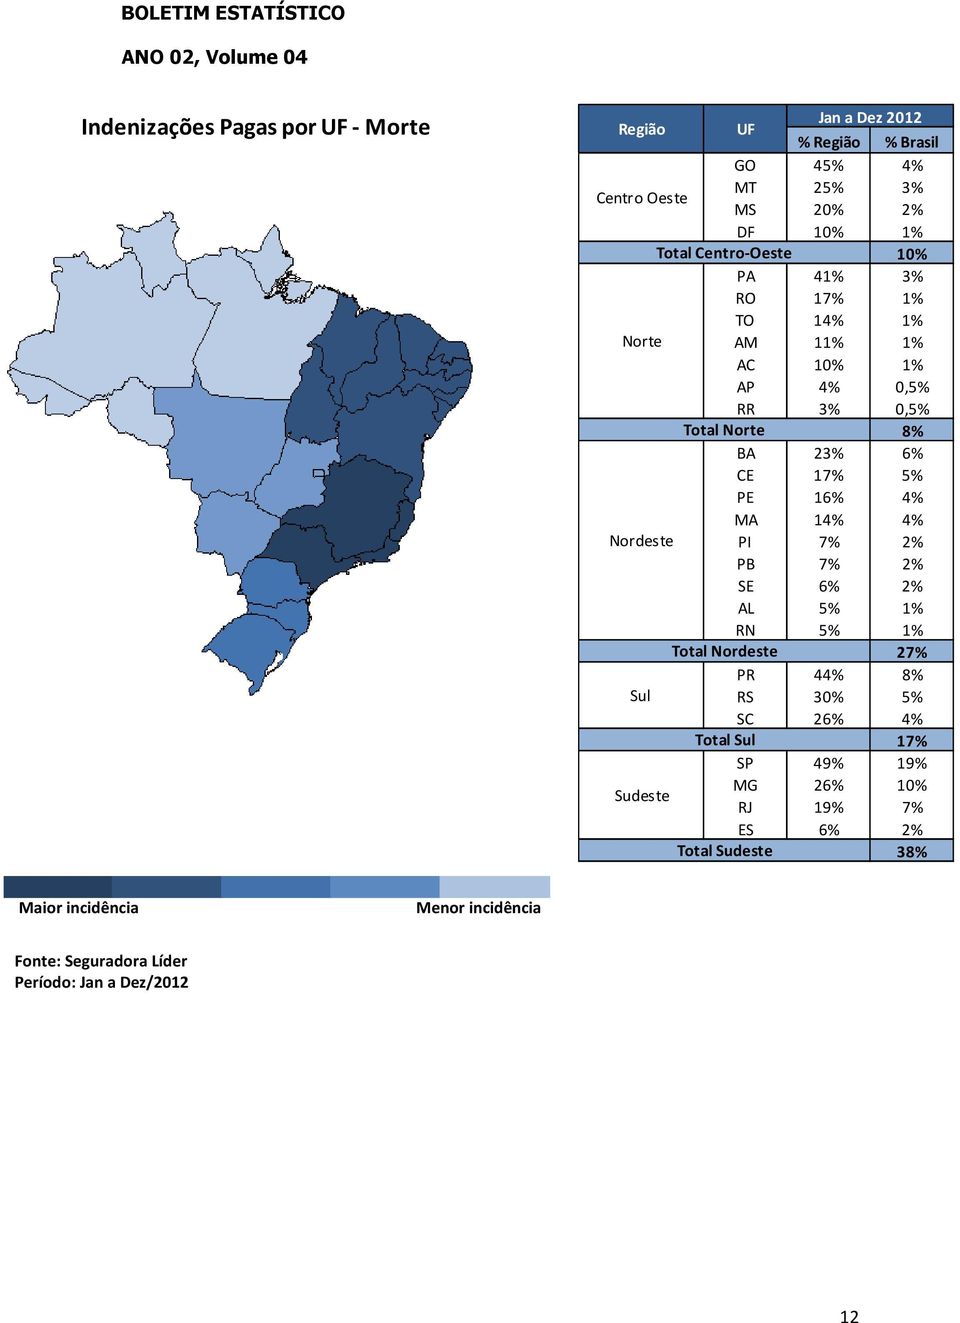 MA 14% 4% Nordeste PI 7% 2% PB 7% 2% SE 6% 2% AL 5% 1% RN 5% 1% Total Nordeste 27% PR 44% 8% Sul RS 30% 5% SC 26% 4% Total Sul 17% SP 49%